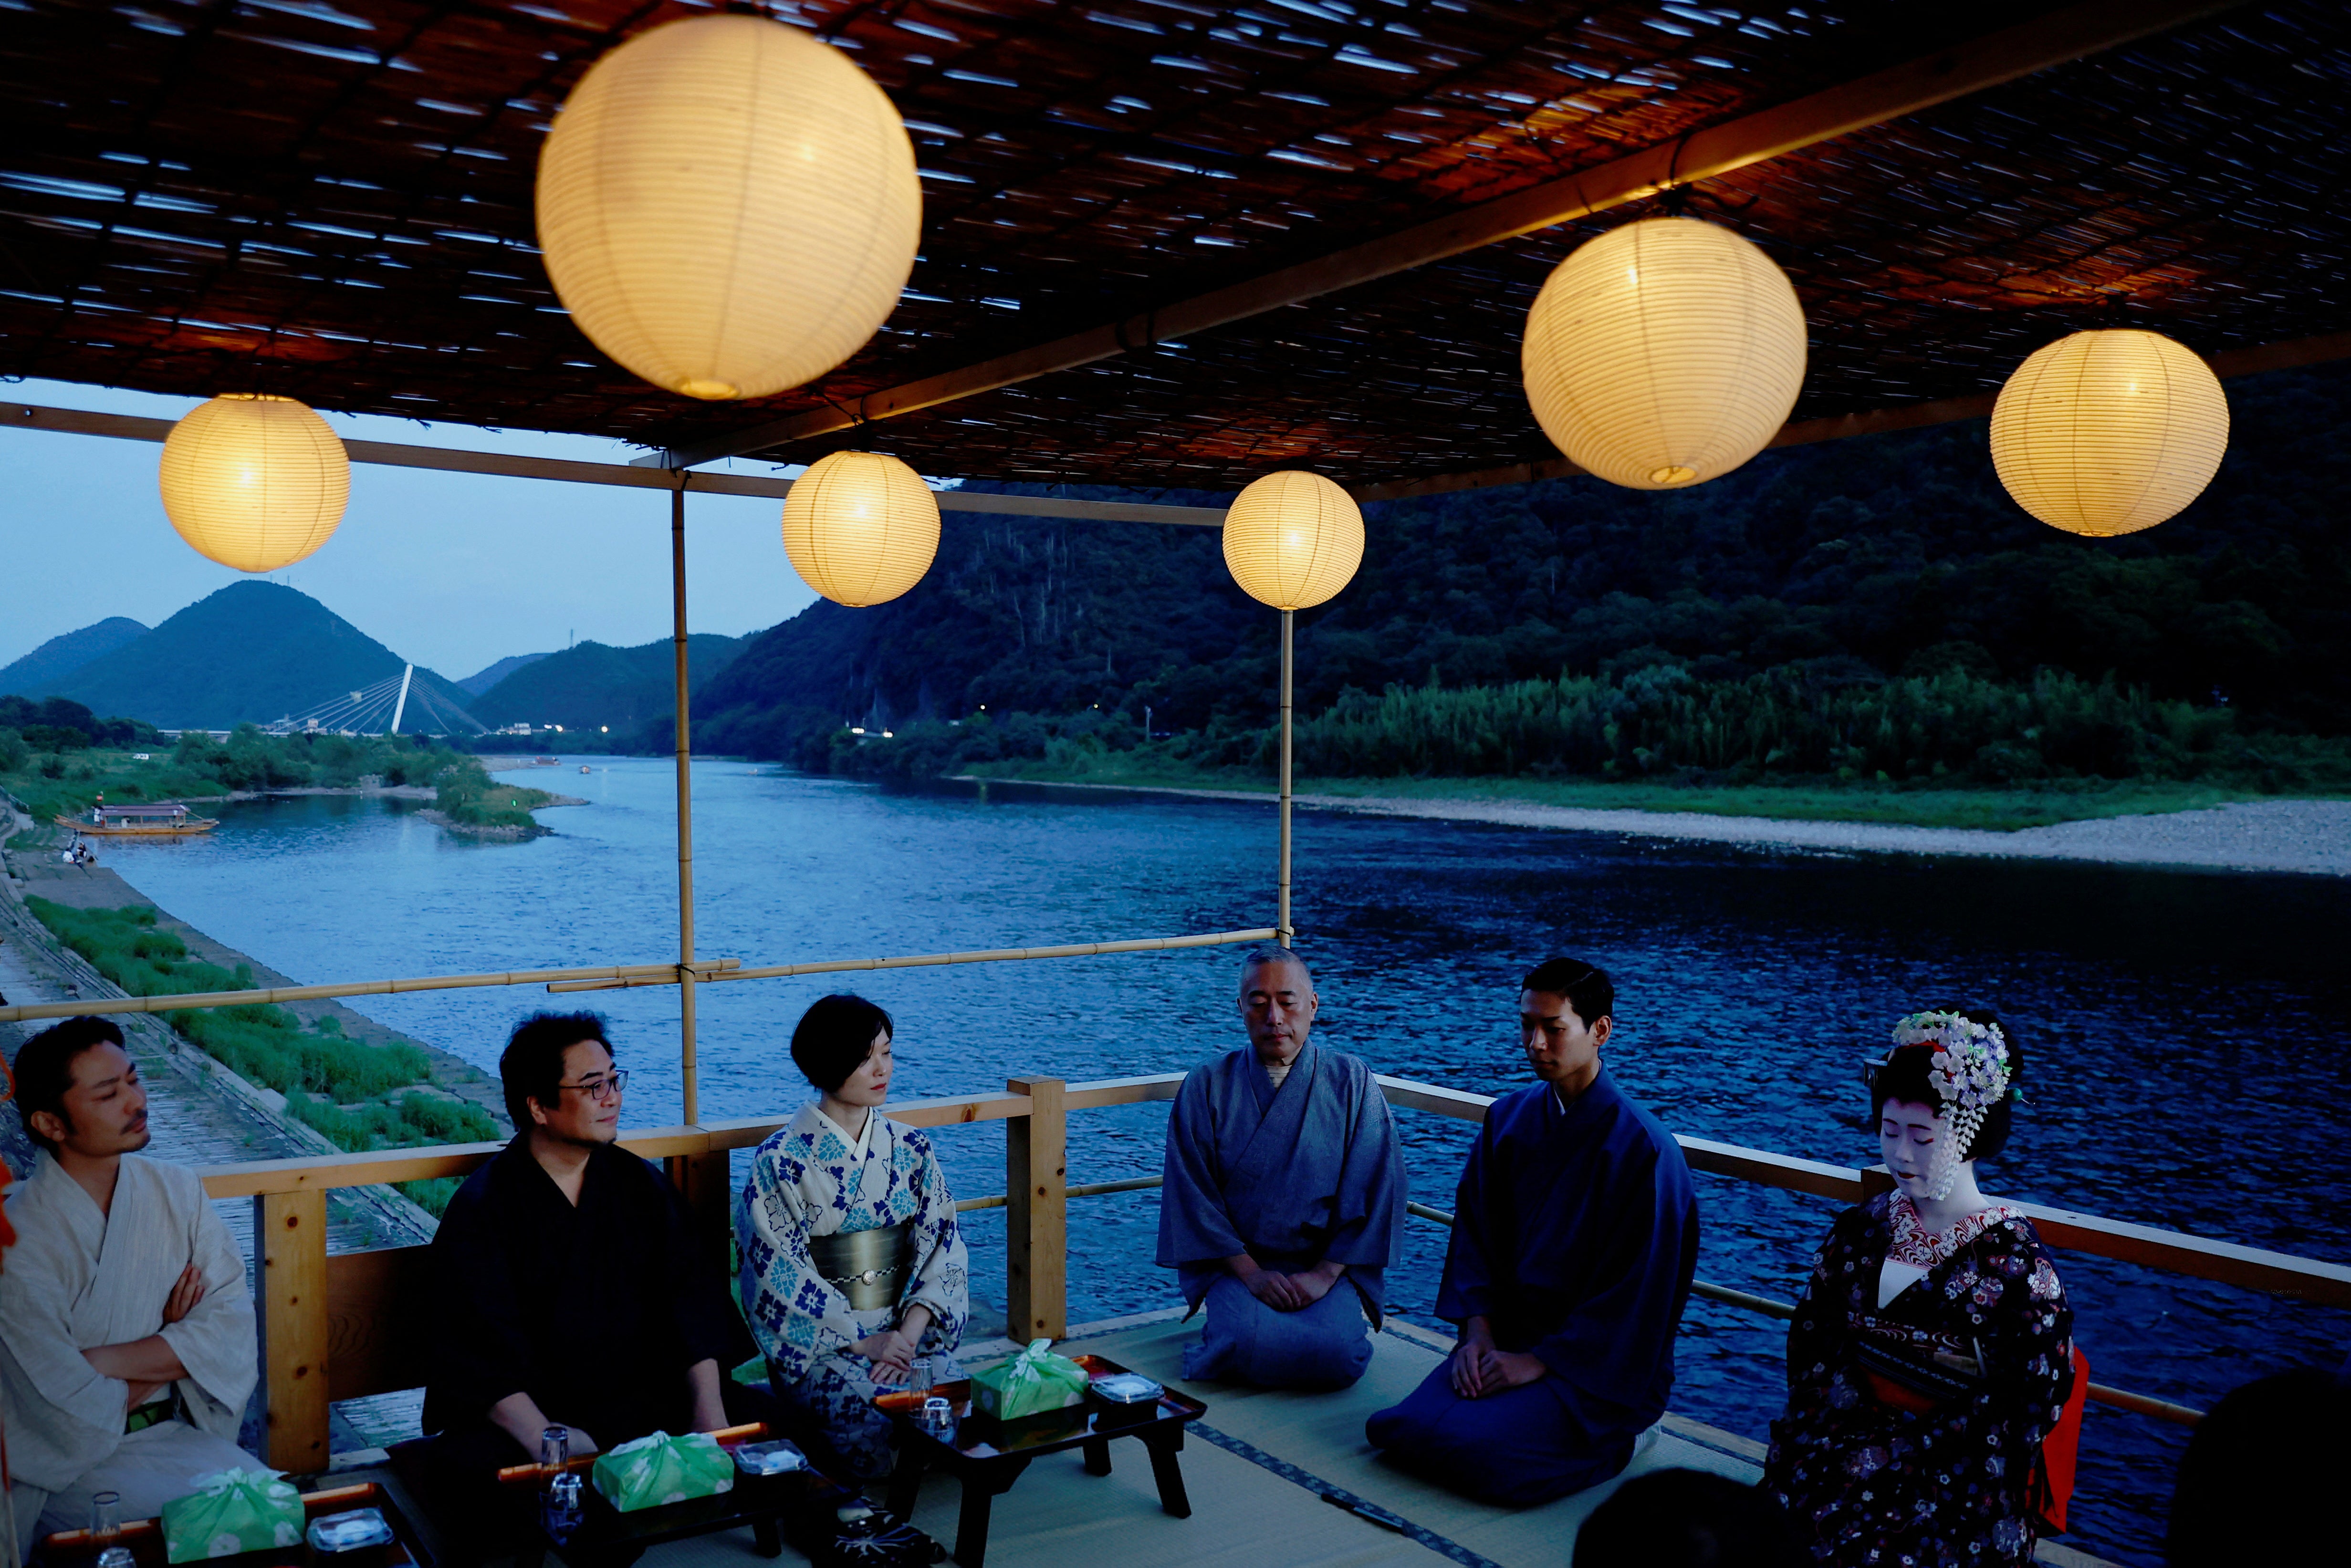 Houkan (male counterpart to Geisha) Tatsuji, 29, and Maiko (apprentice female Geisha), Kikuyu, 20, sit with visitors to watch ‘ukai’ at a riverside observation deck in the Nagara River